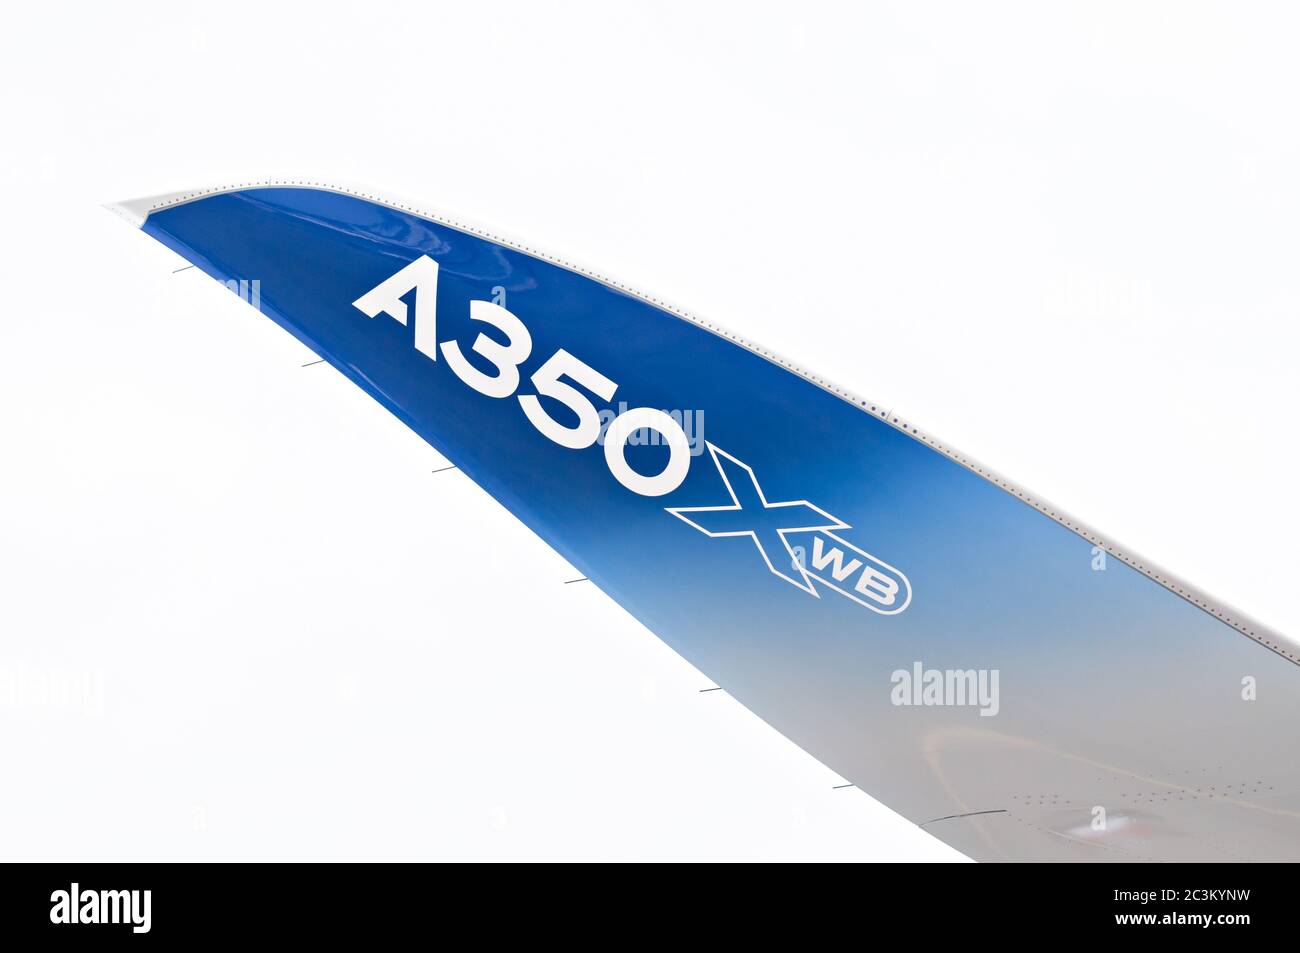 SINGAPUR - FEBRUAR 11: Winglet des Airbus A350 XWB Prototyps 003 auf der Singapore Airshow, Changi Exhibition Centre in Singapur am 11. Februar 2014. Stockfoto